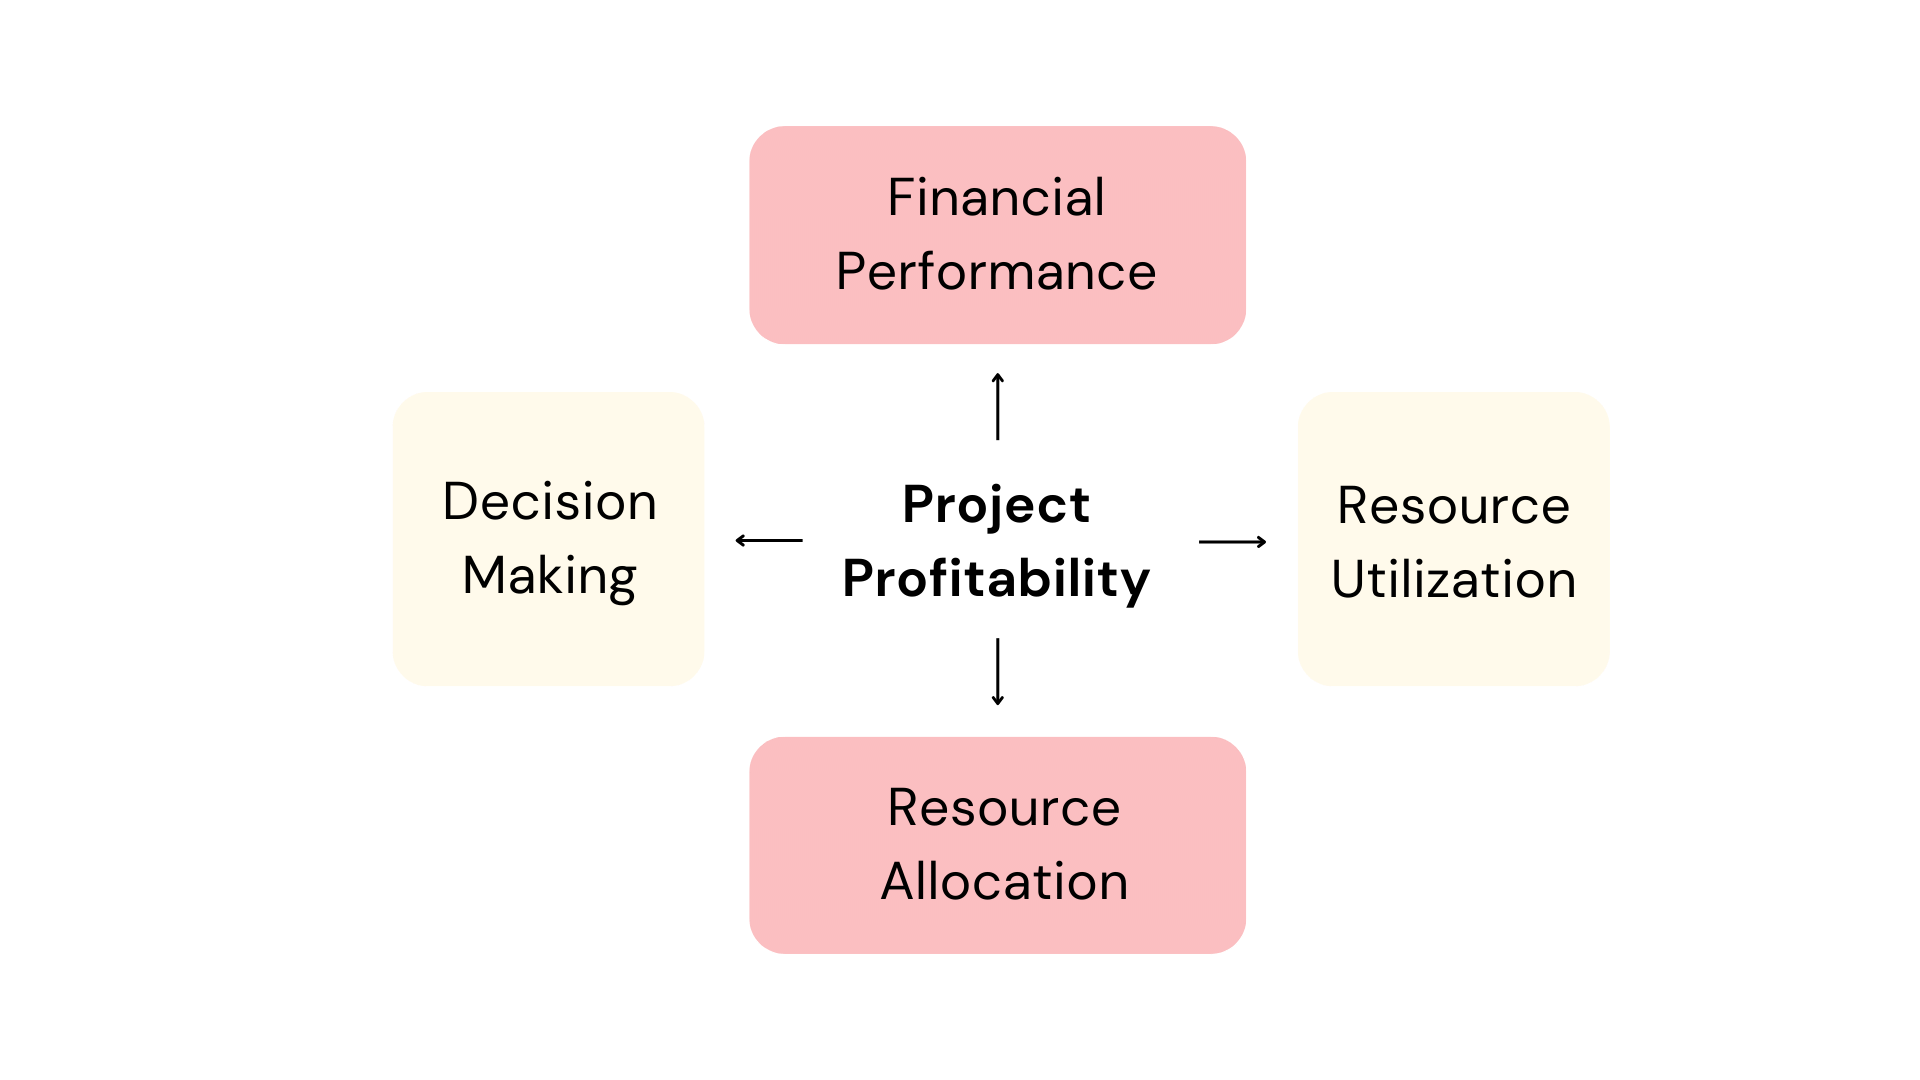 Project profitability